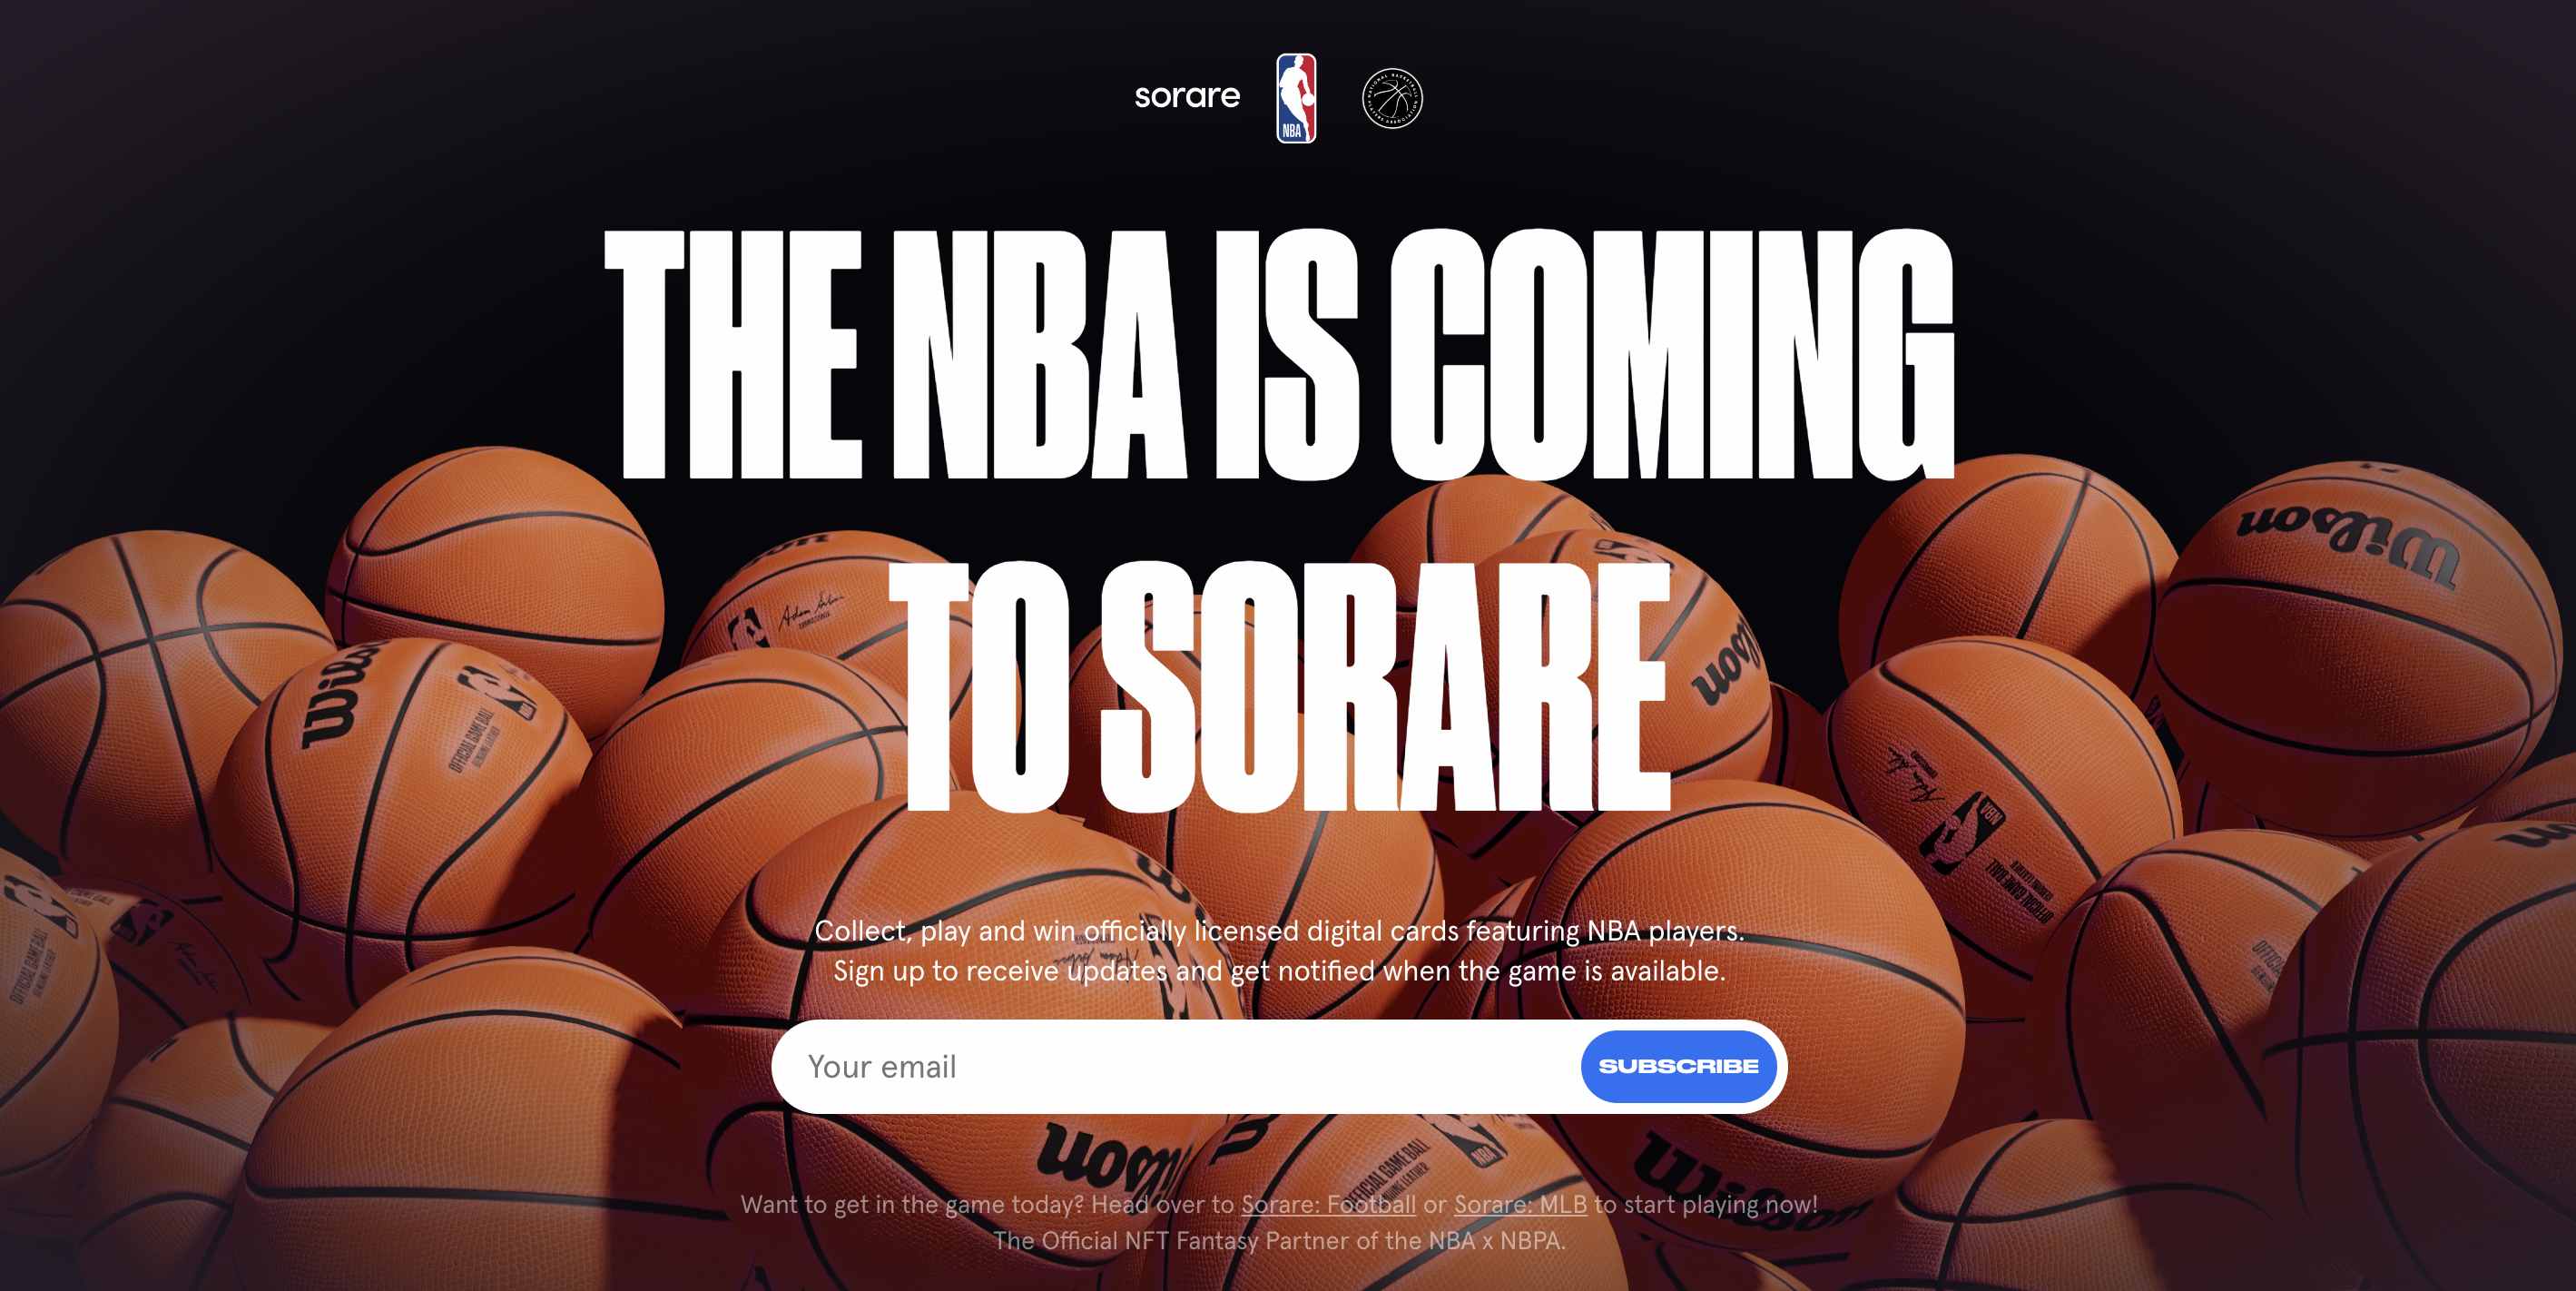 The Sorare NBA website